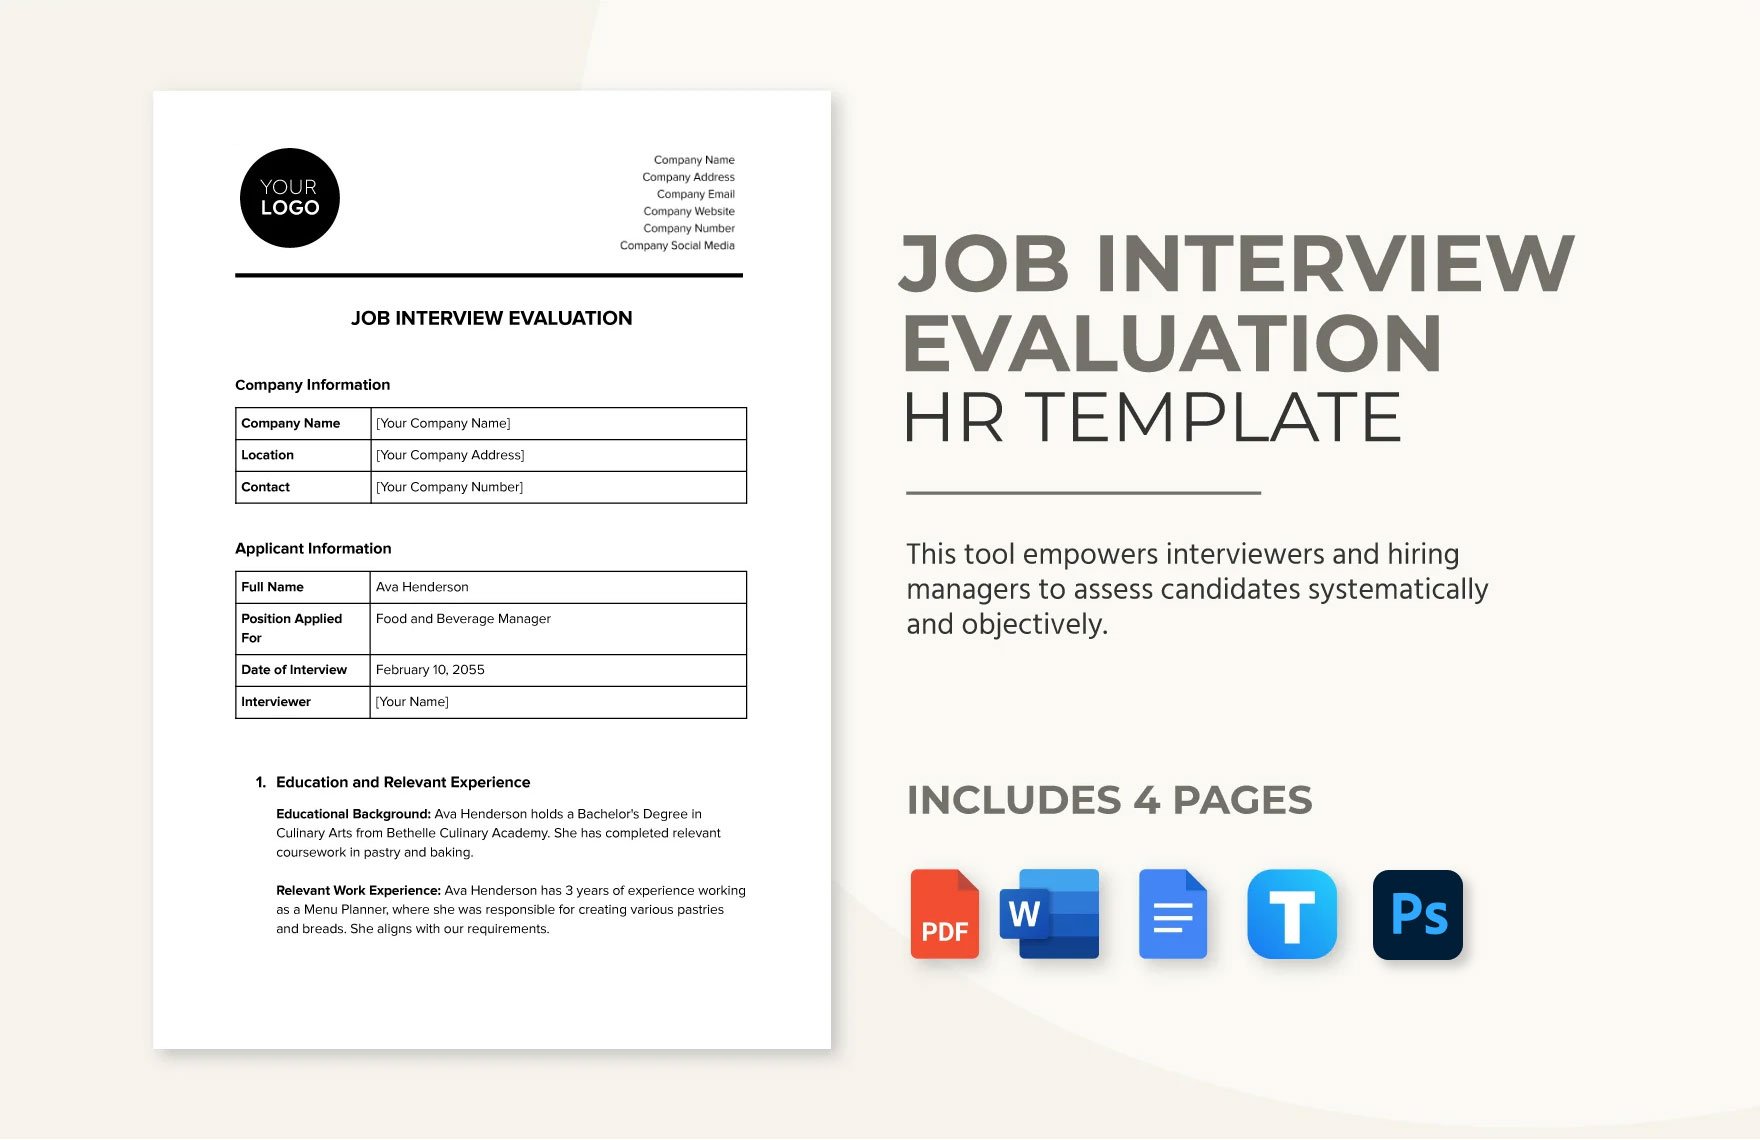 Job Interview Evaluation HR Template